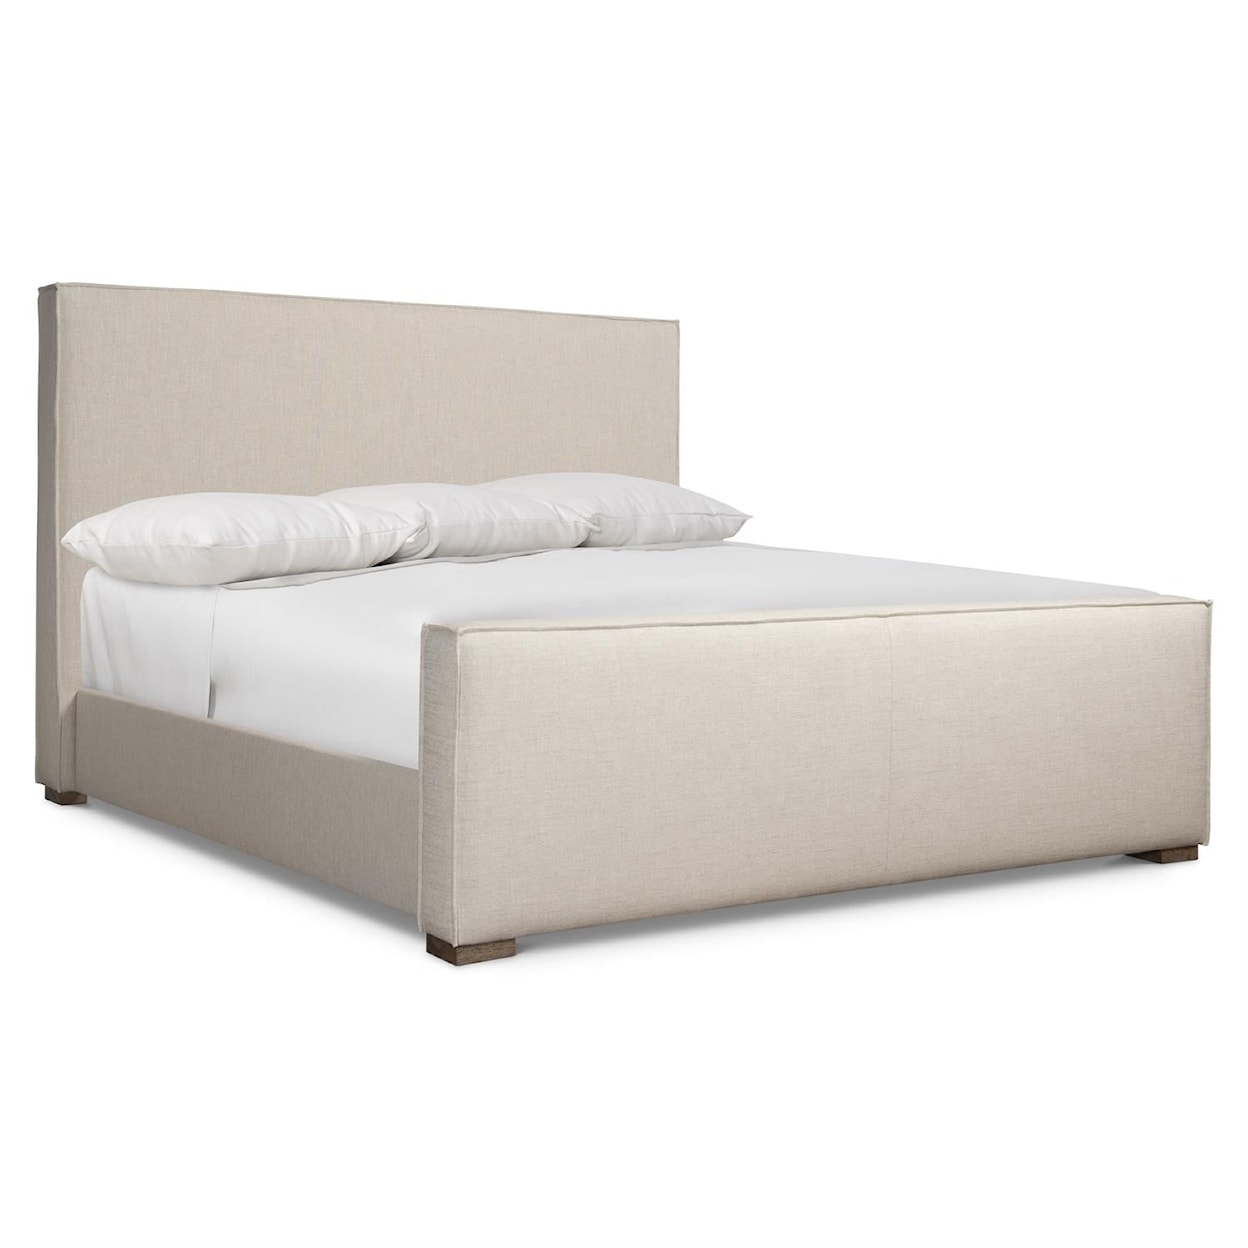 Bernhardt Tribeca Tribeca Customizable Panel Bed King